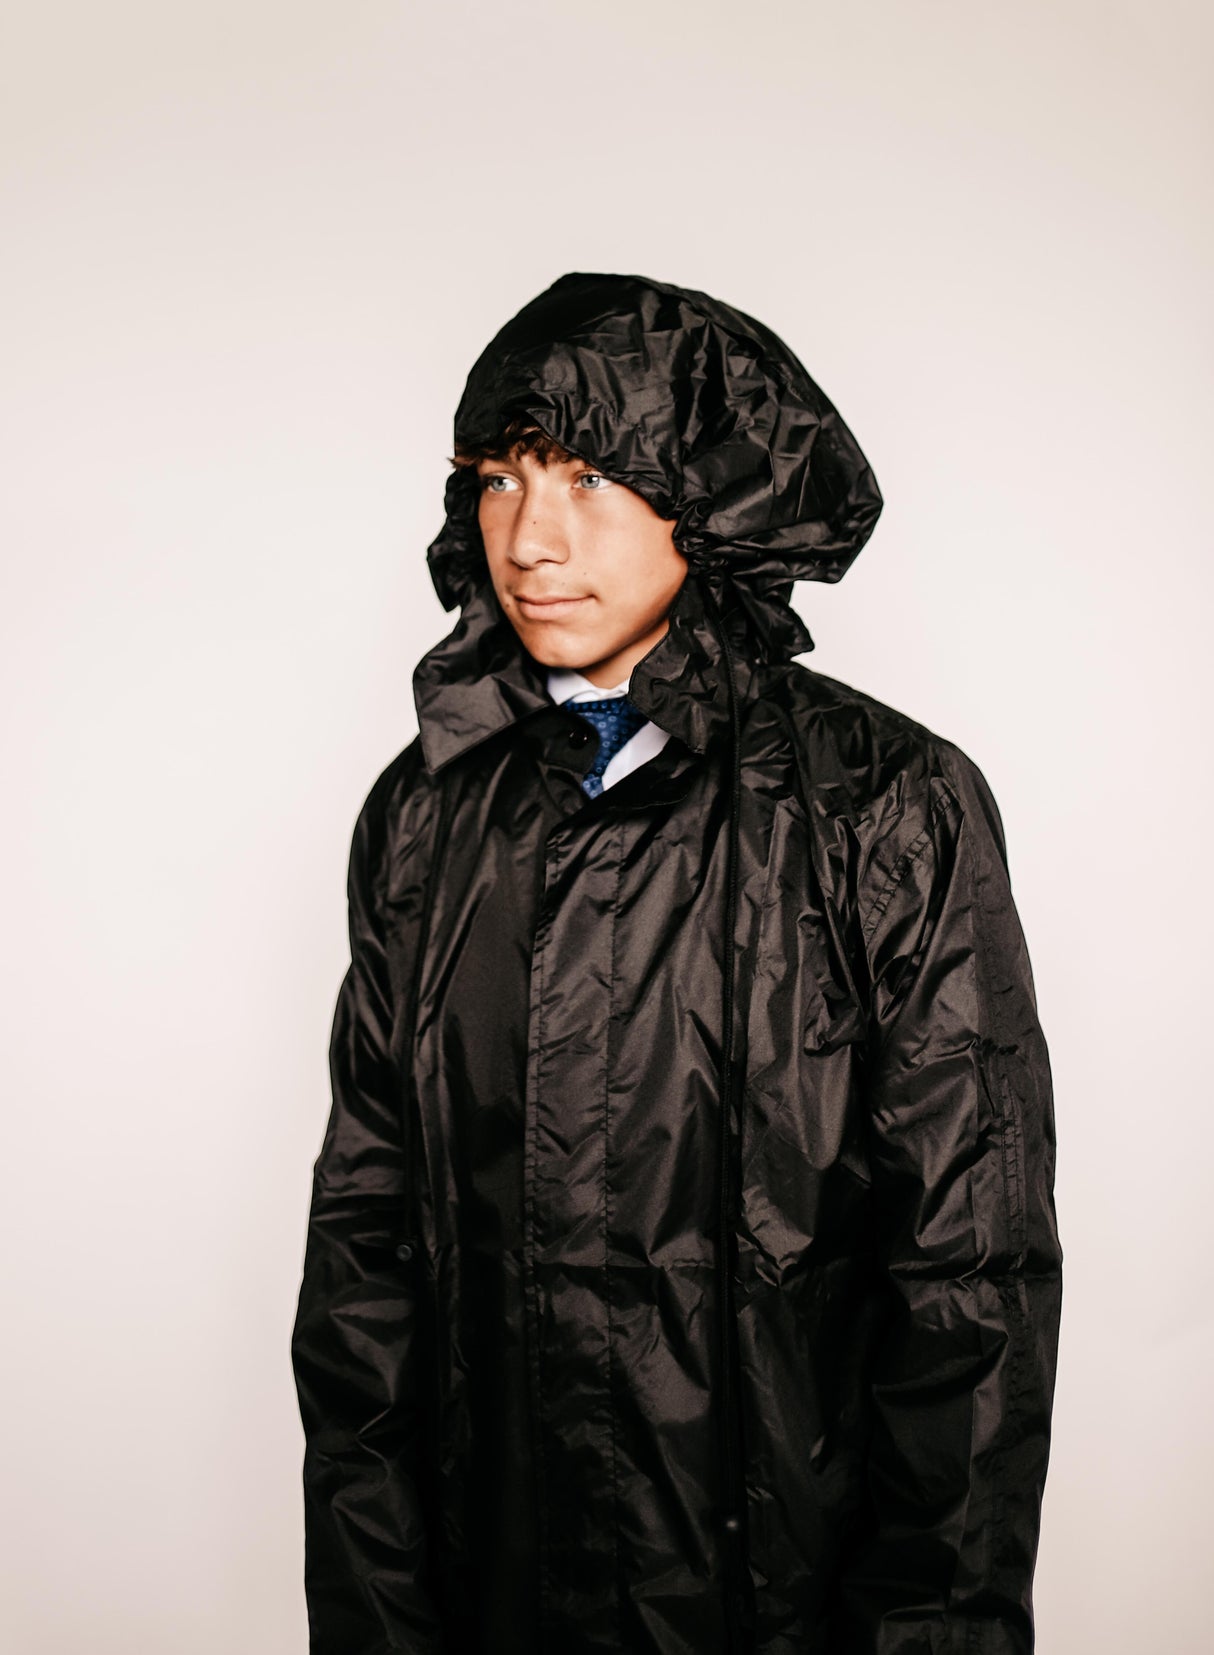 Weathertech Mens Full Length Raincoat